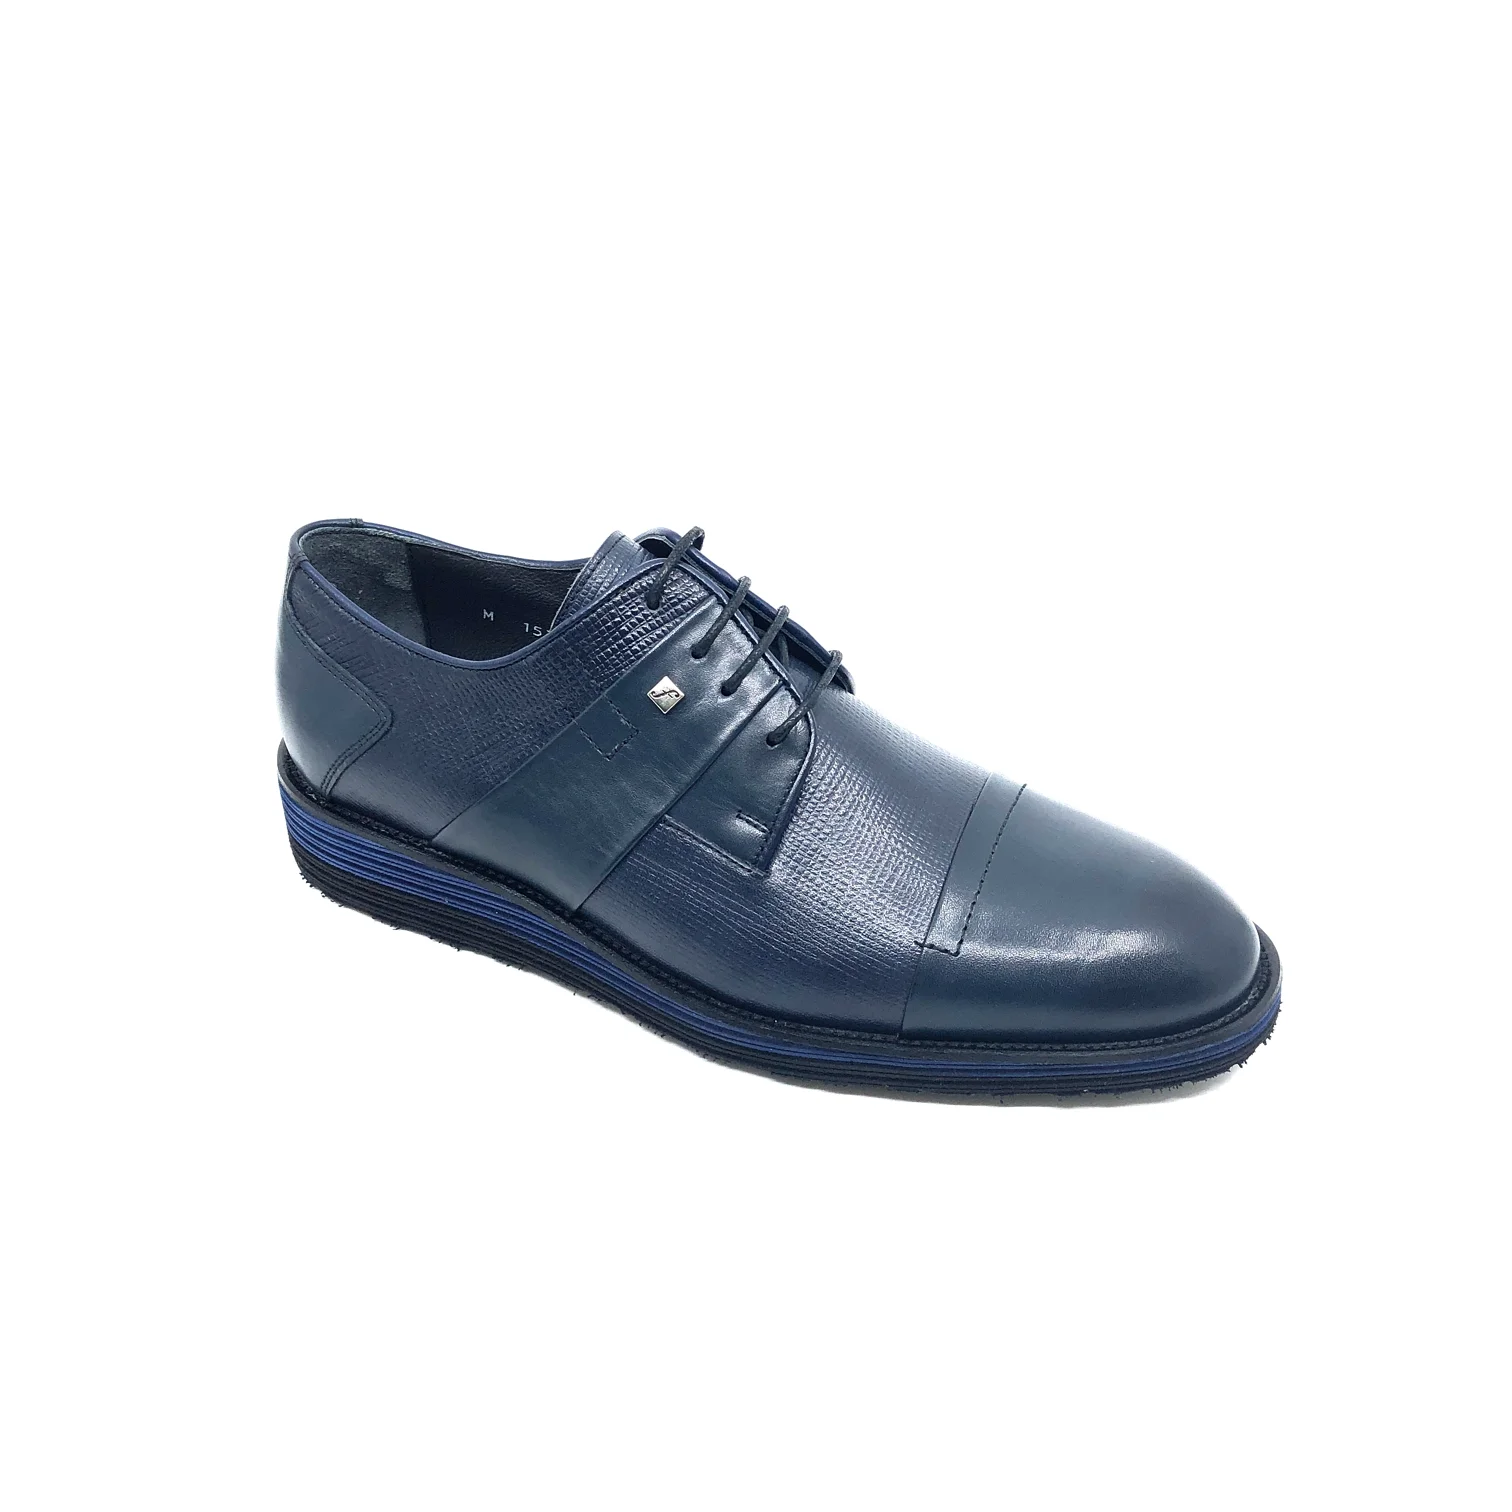 

Fosco Lace Up Men's Casual Shoes %100 Genuine Leather Dark Blue Colour Eva Sole